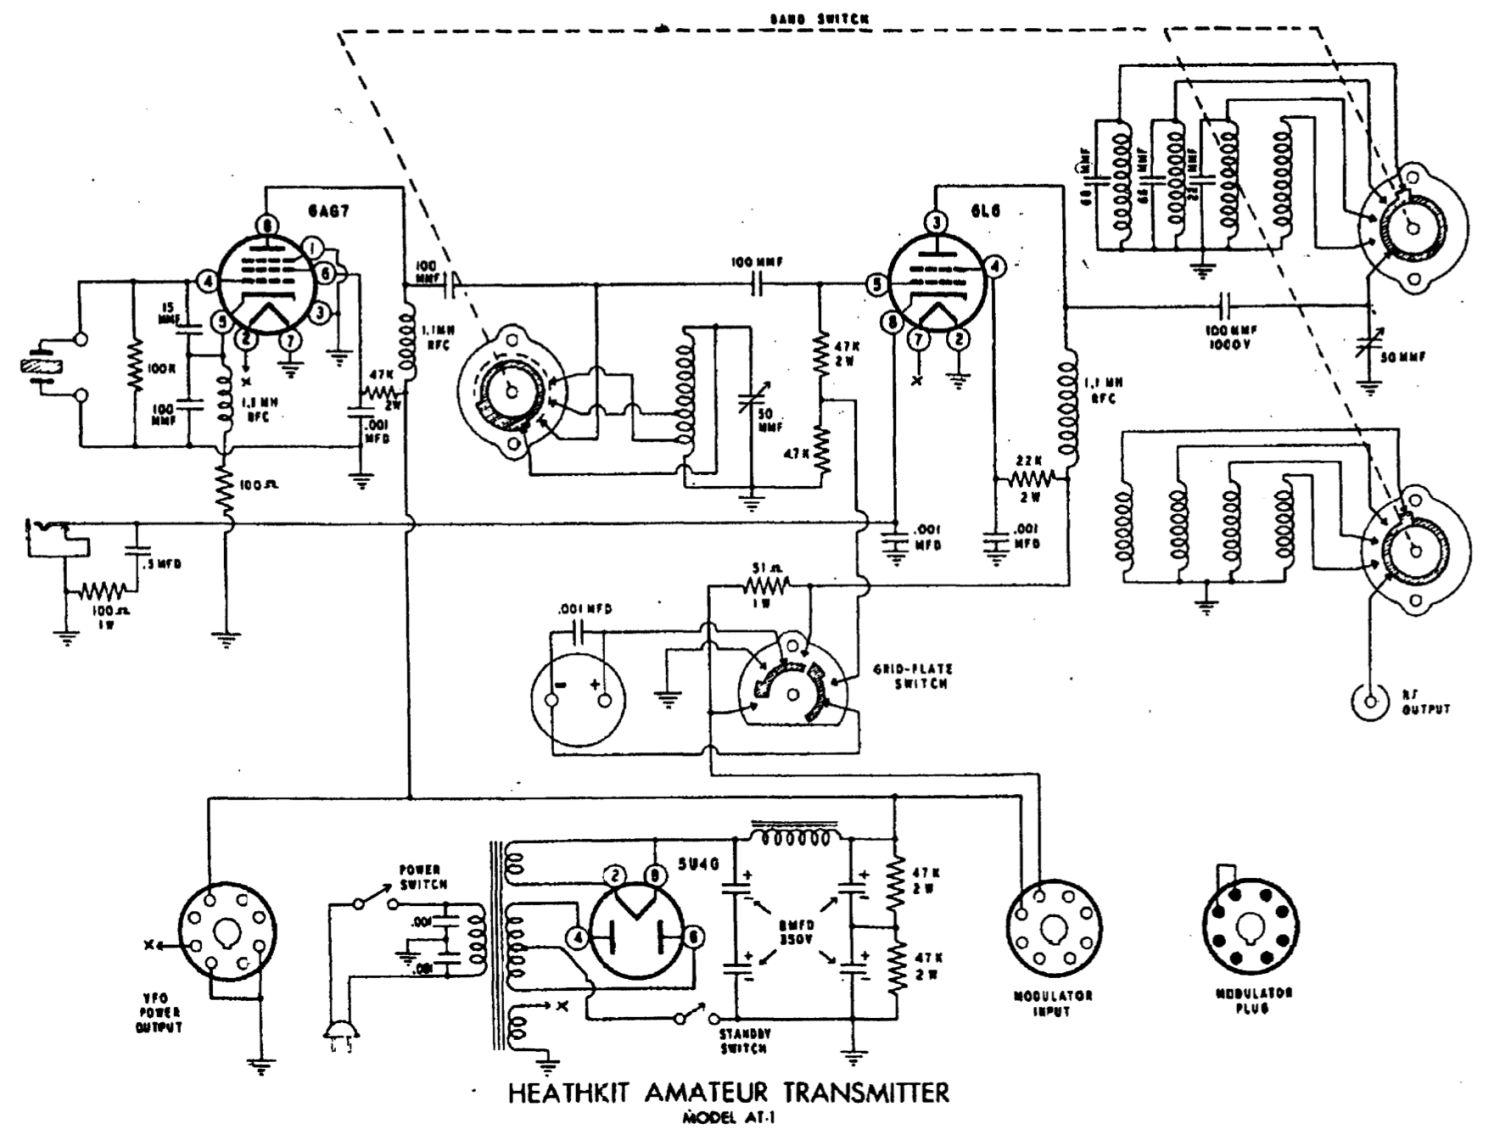 Heathkit AT-1 Amateur Transmitter - Schematic